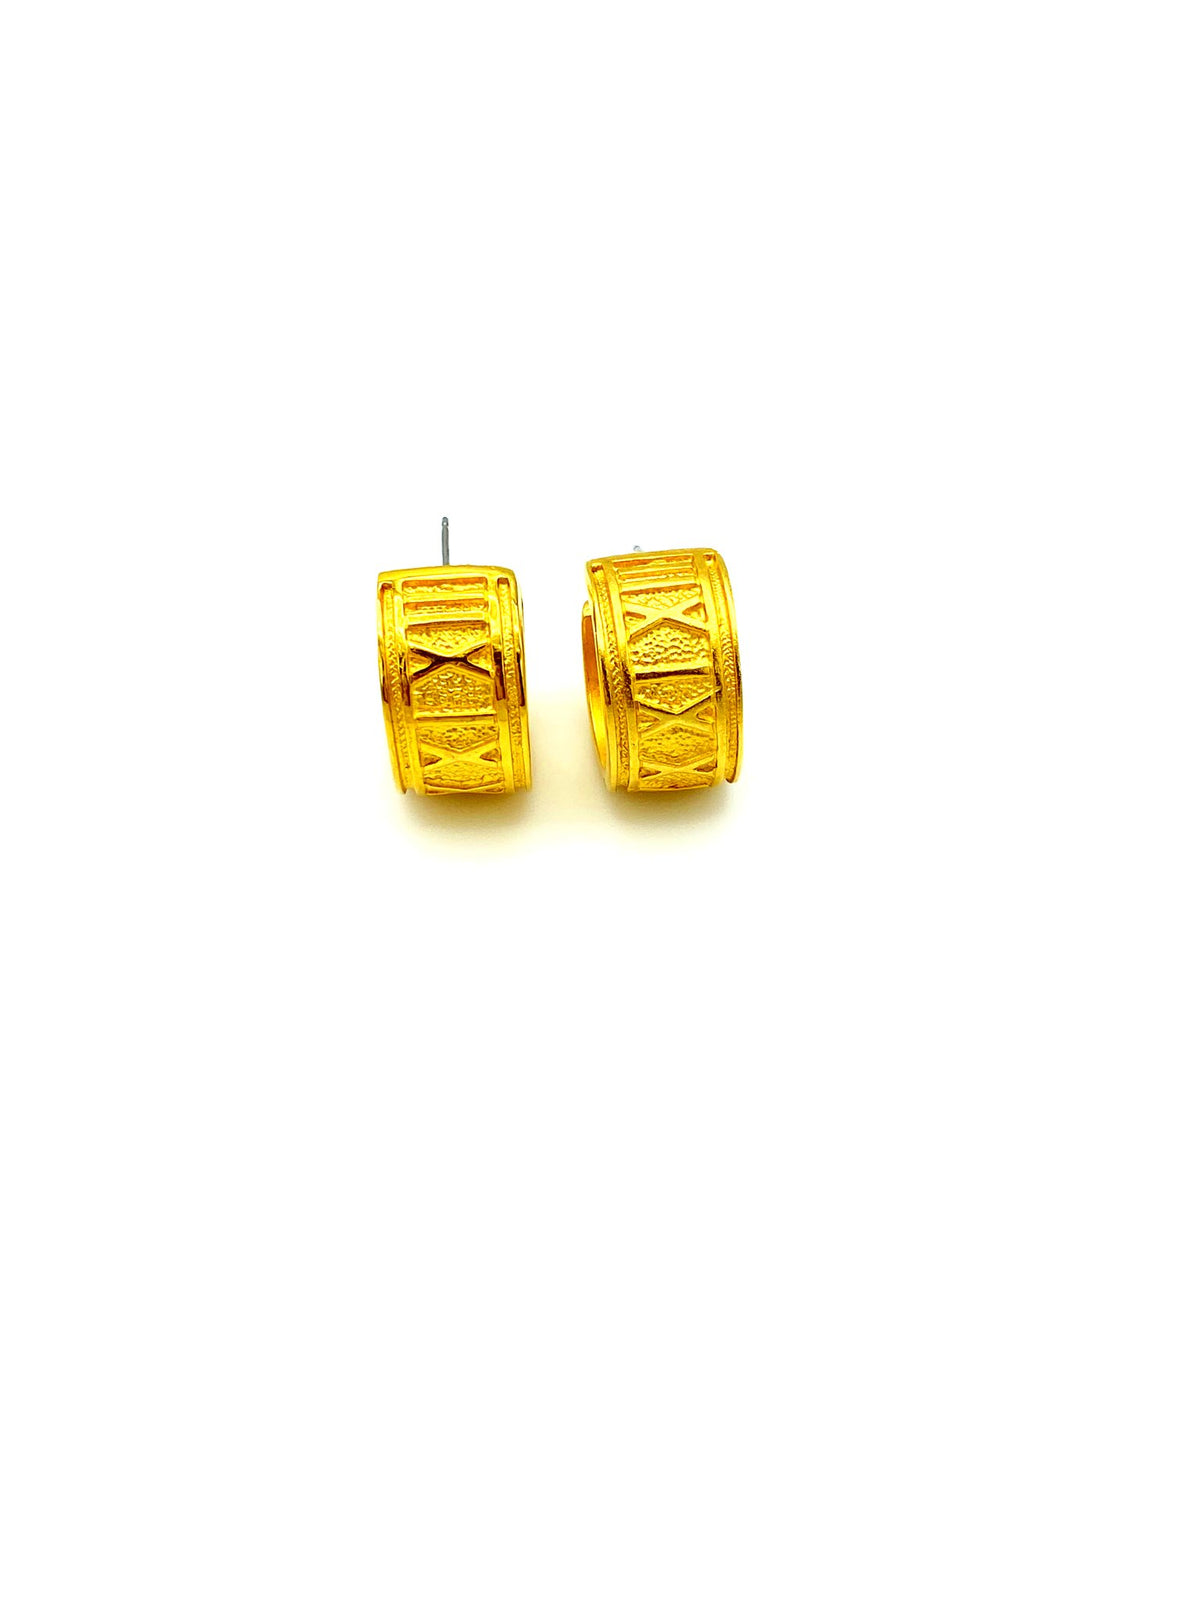 Wide Roman Numeral Hoop Gold Pierced Vintage Earrings - 24 Wishes Vintage Jewelry